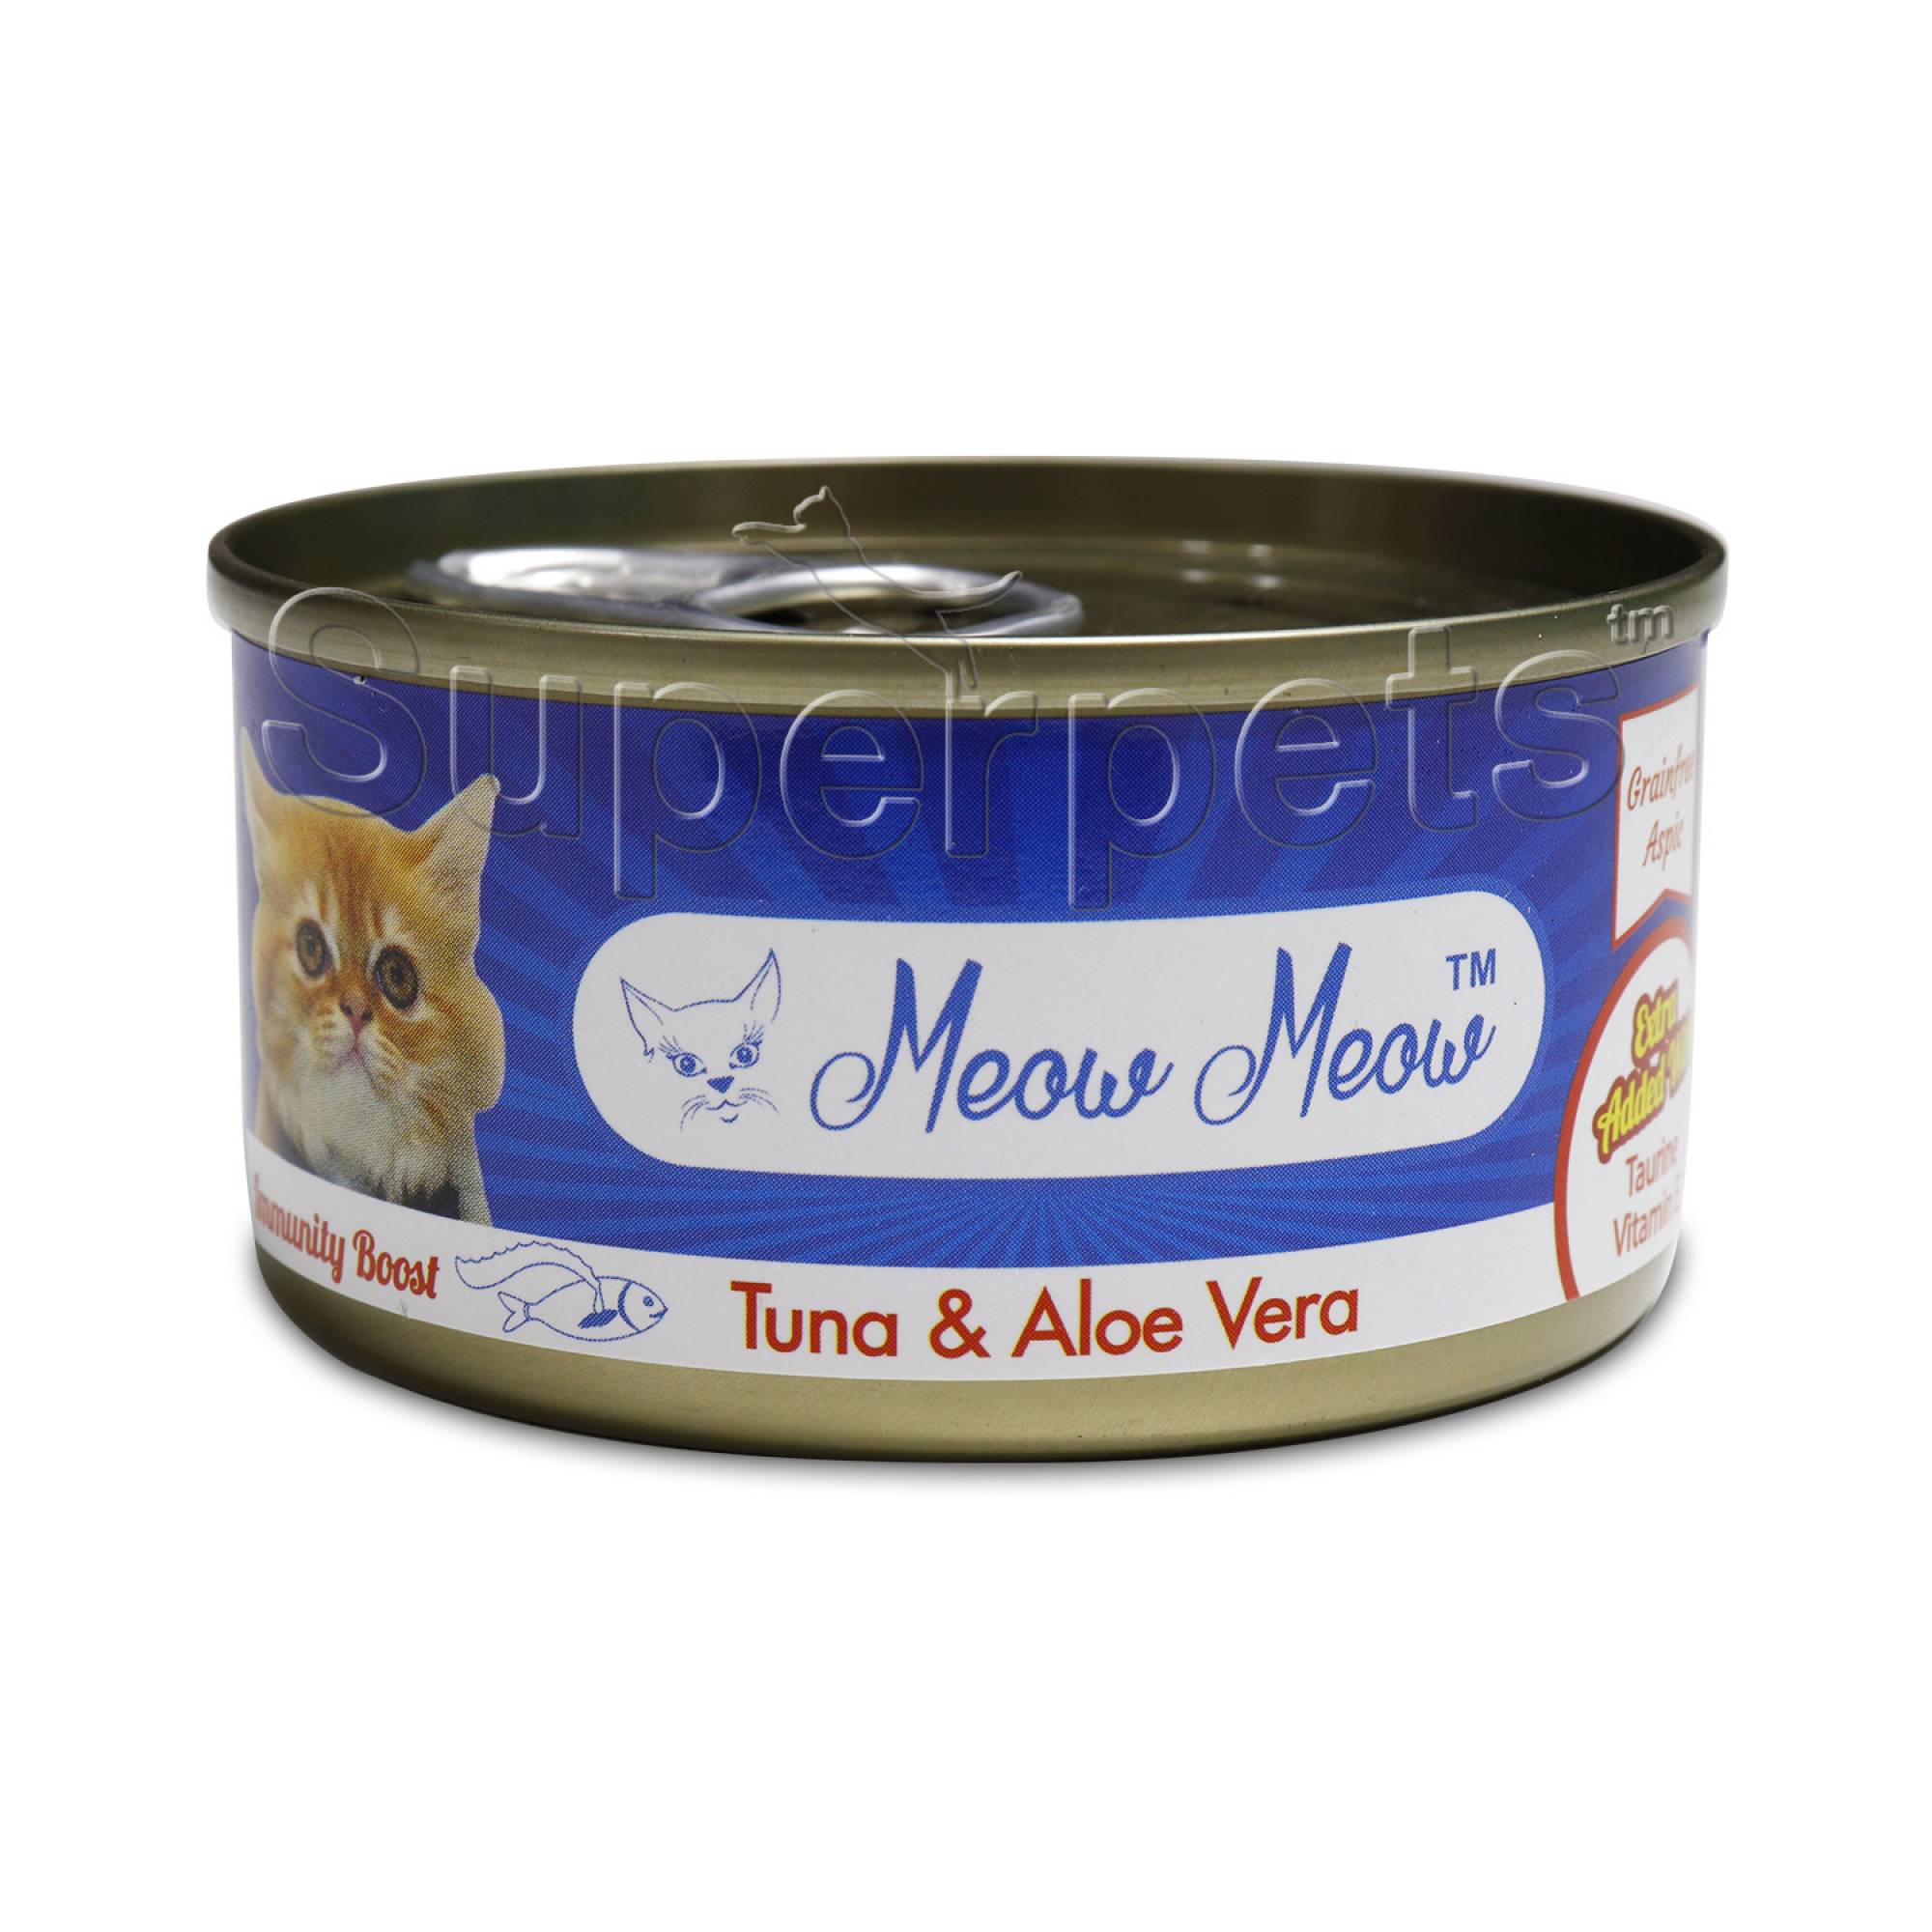 Meow Meow - Tuna & Aloe Vera - Grain Free 80g x 24pcs (1 carton)